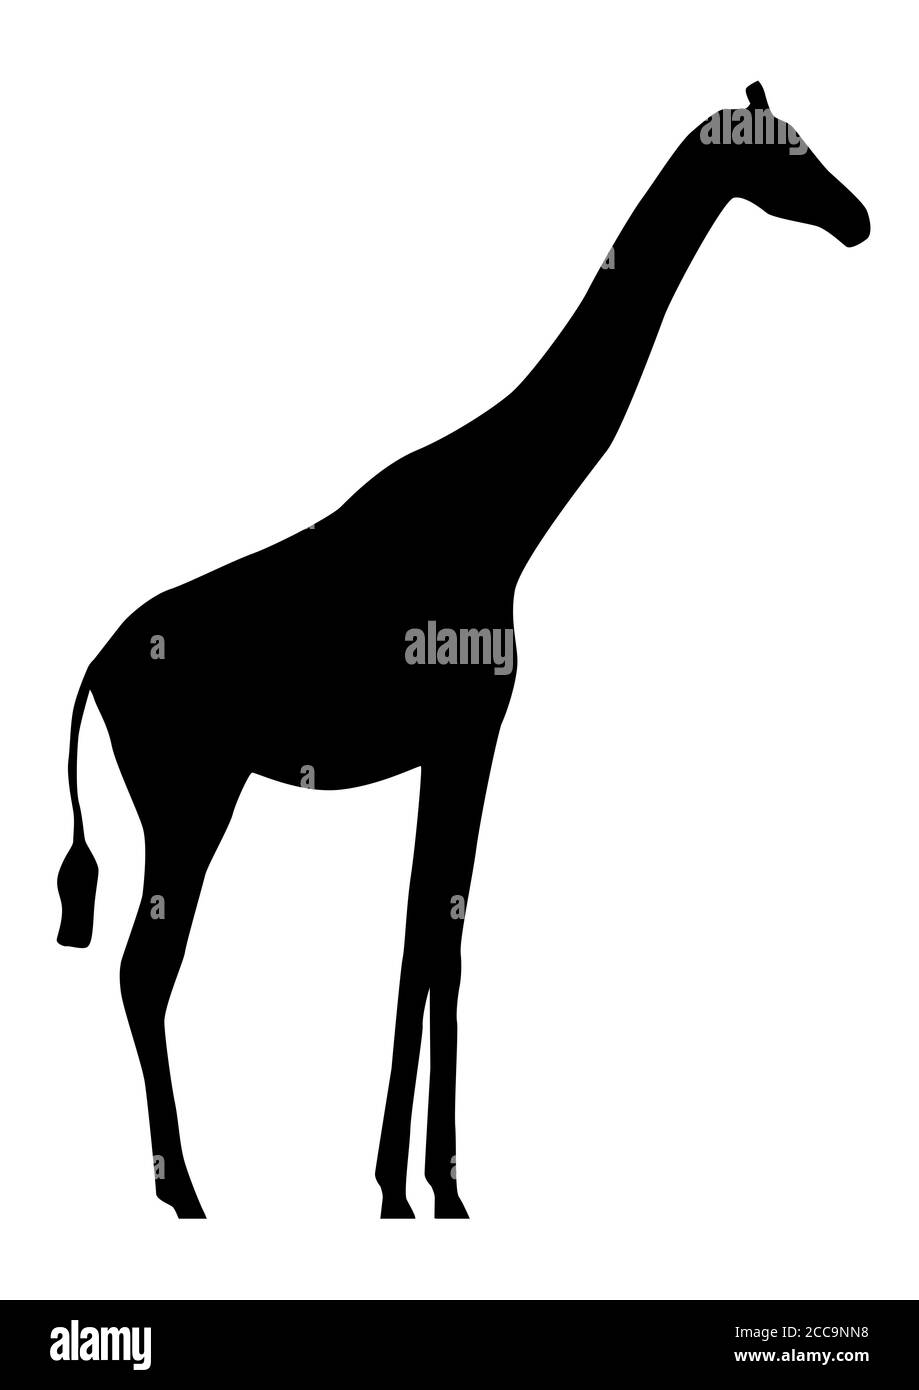 Digital illustration of a giraffe black silhouette icon on a white background Stock Photo